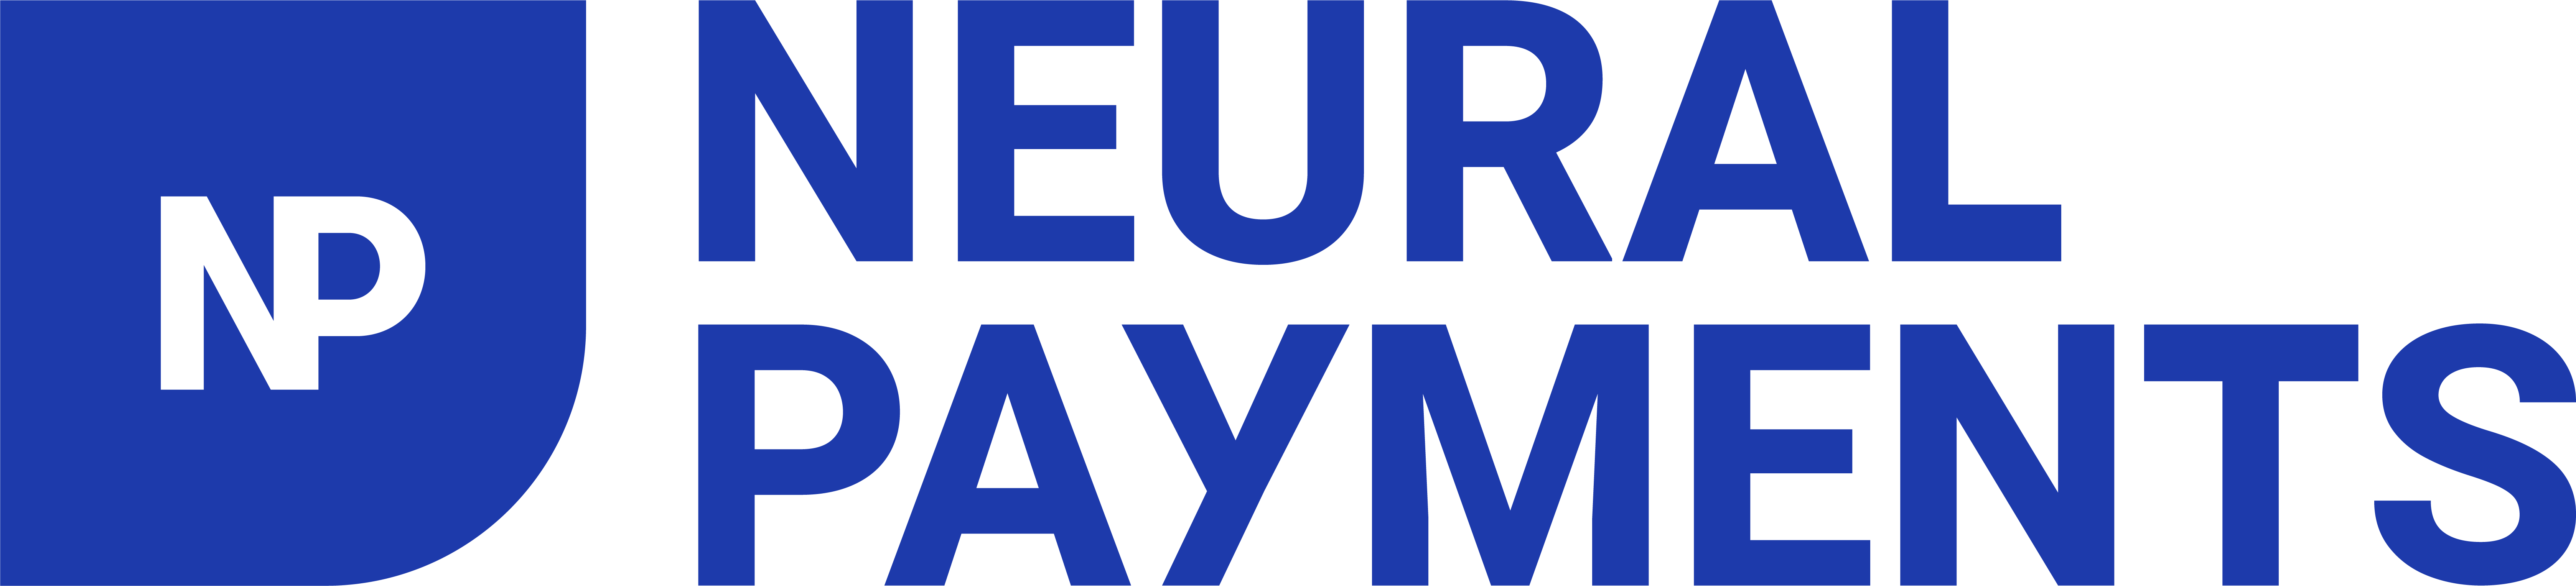 Neural Payments logo